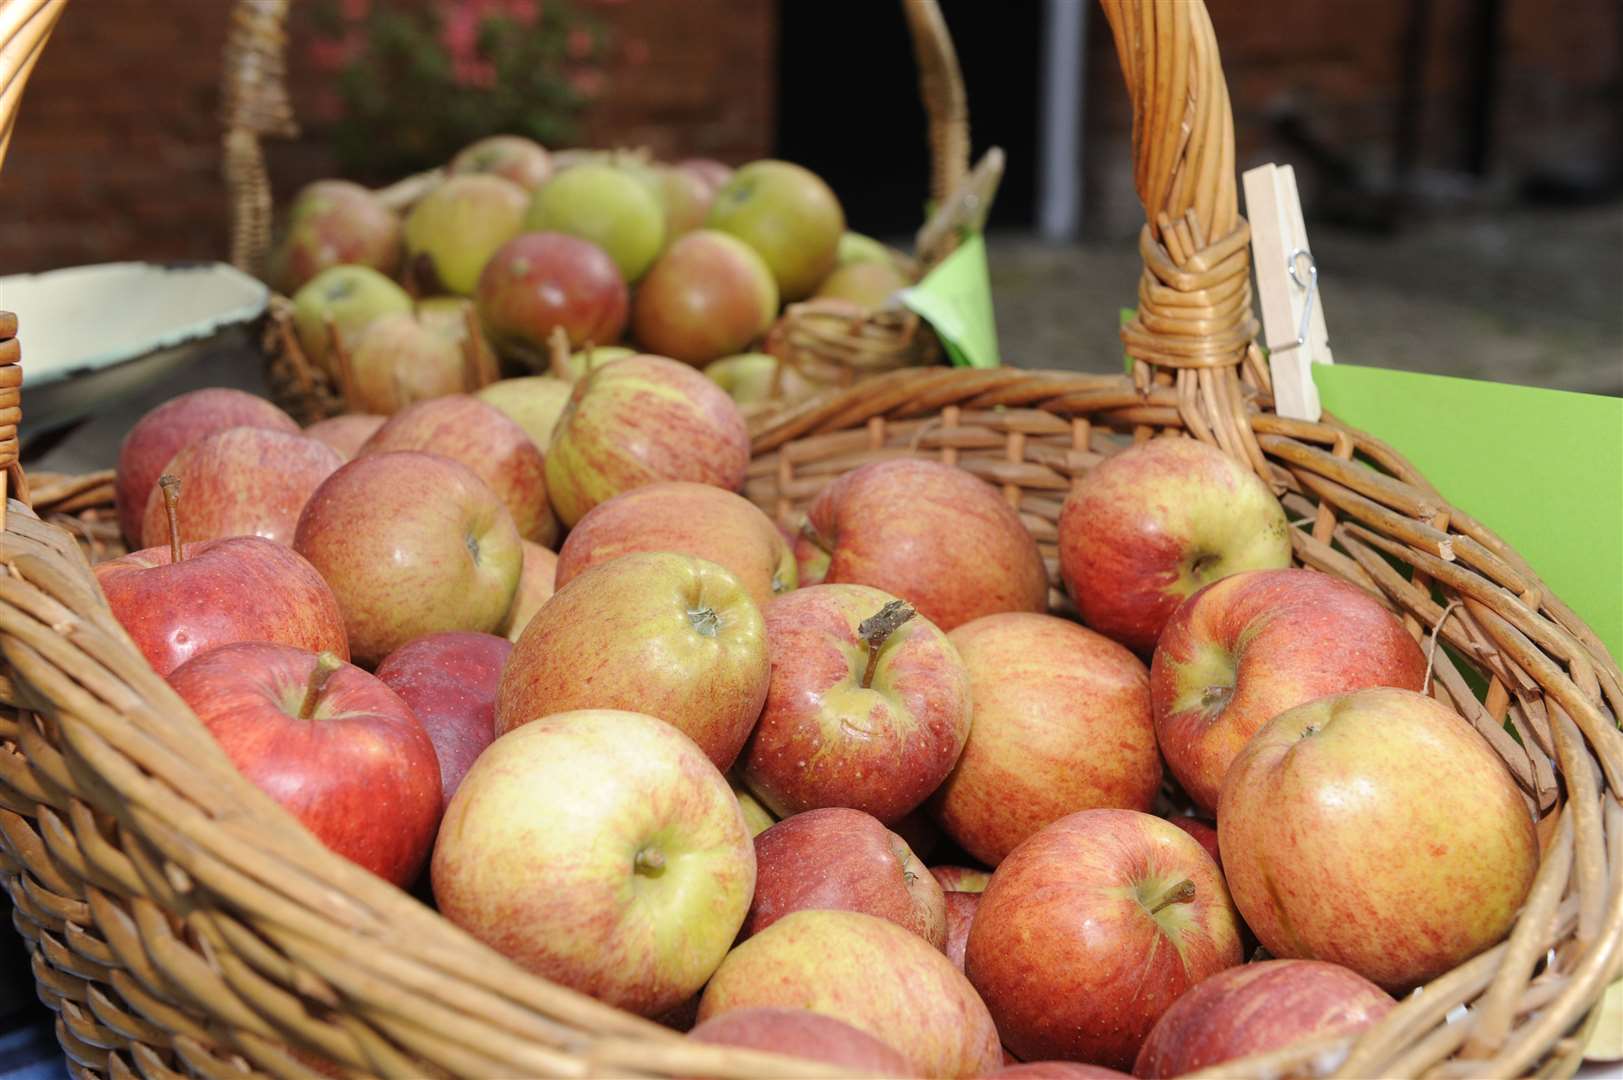 Mount Ephraim Gardens is hosting Apple Sunday this weekend